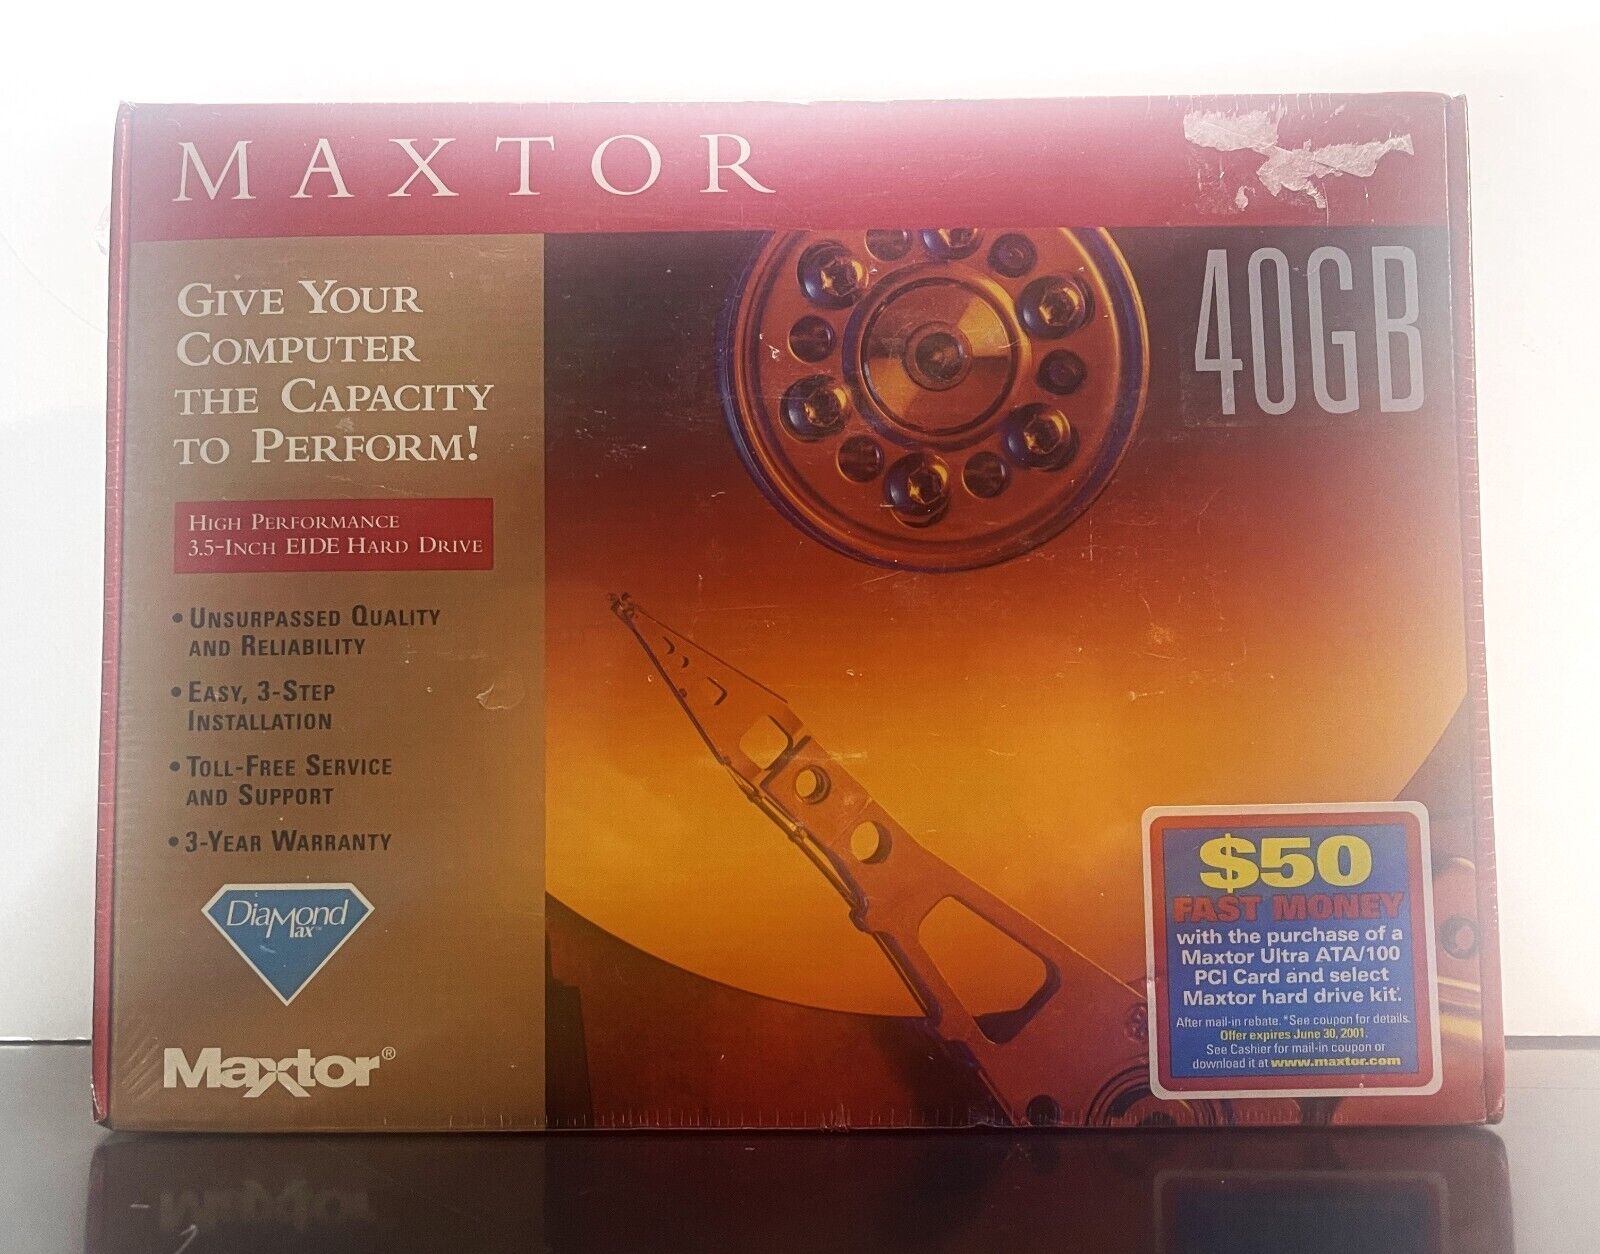 Maxtor DIAMOND MAX Hard Drive 40GB 3.5 Inch EIDE Hard Drive Kit VINTAGE,SEALED